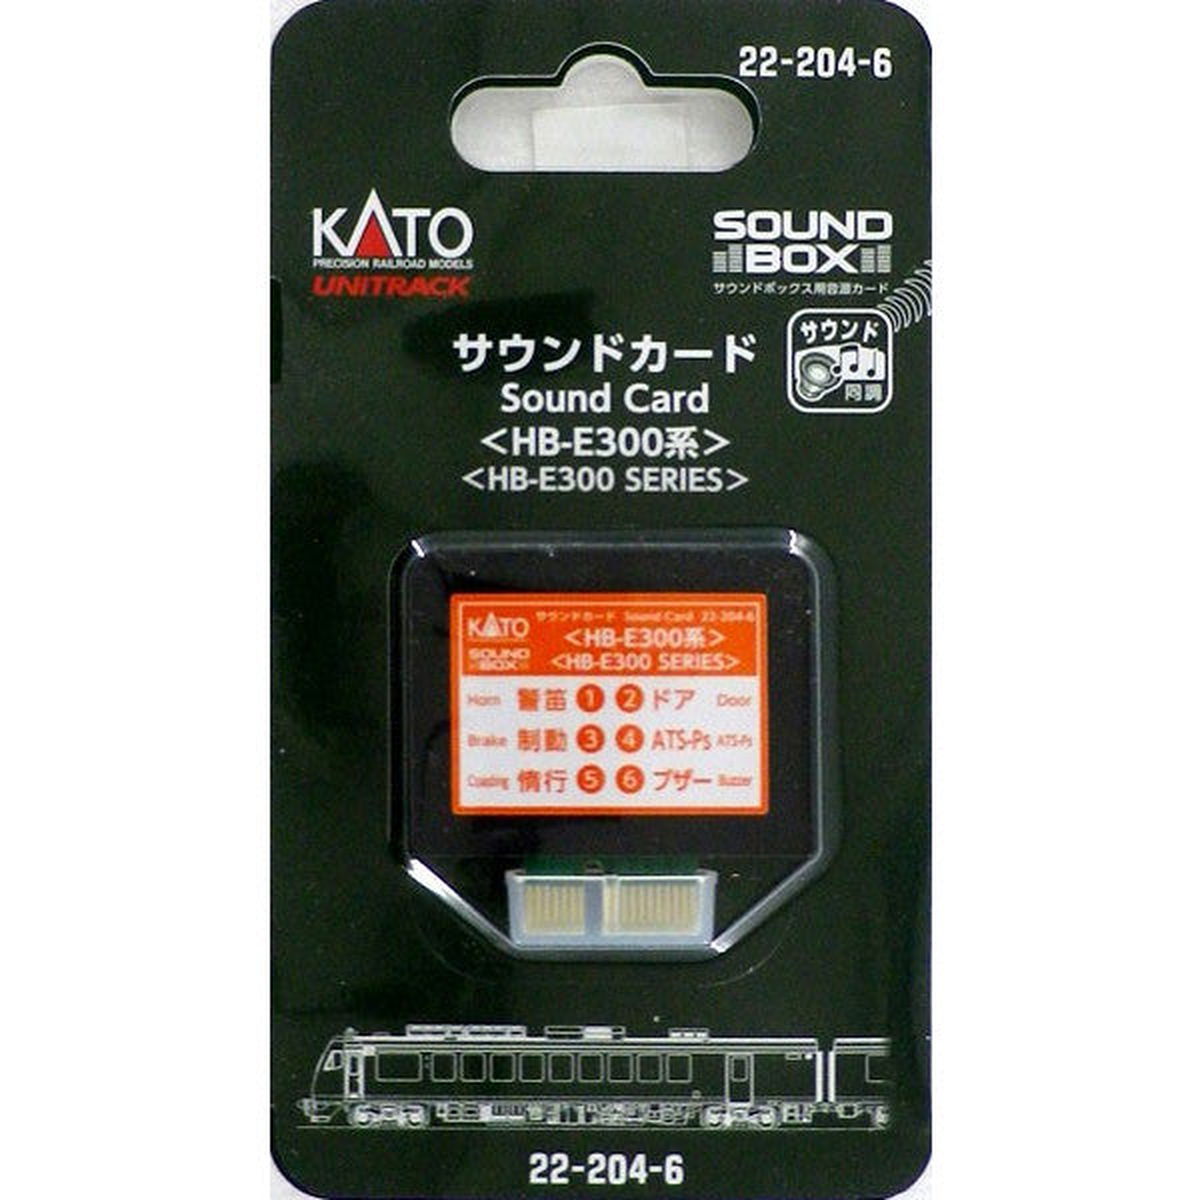 KATO 22-204-6 Unitrack Sound Card Series HB-E300 [for Sound Box] - BanzaiHobby